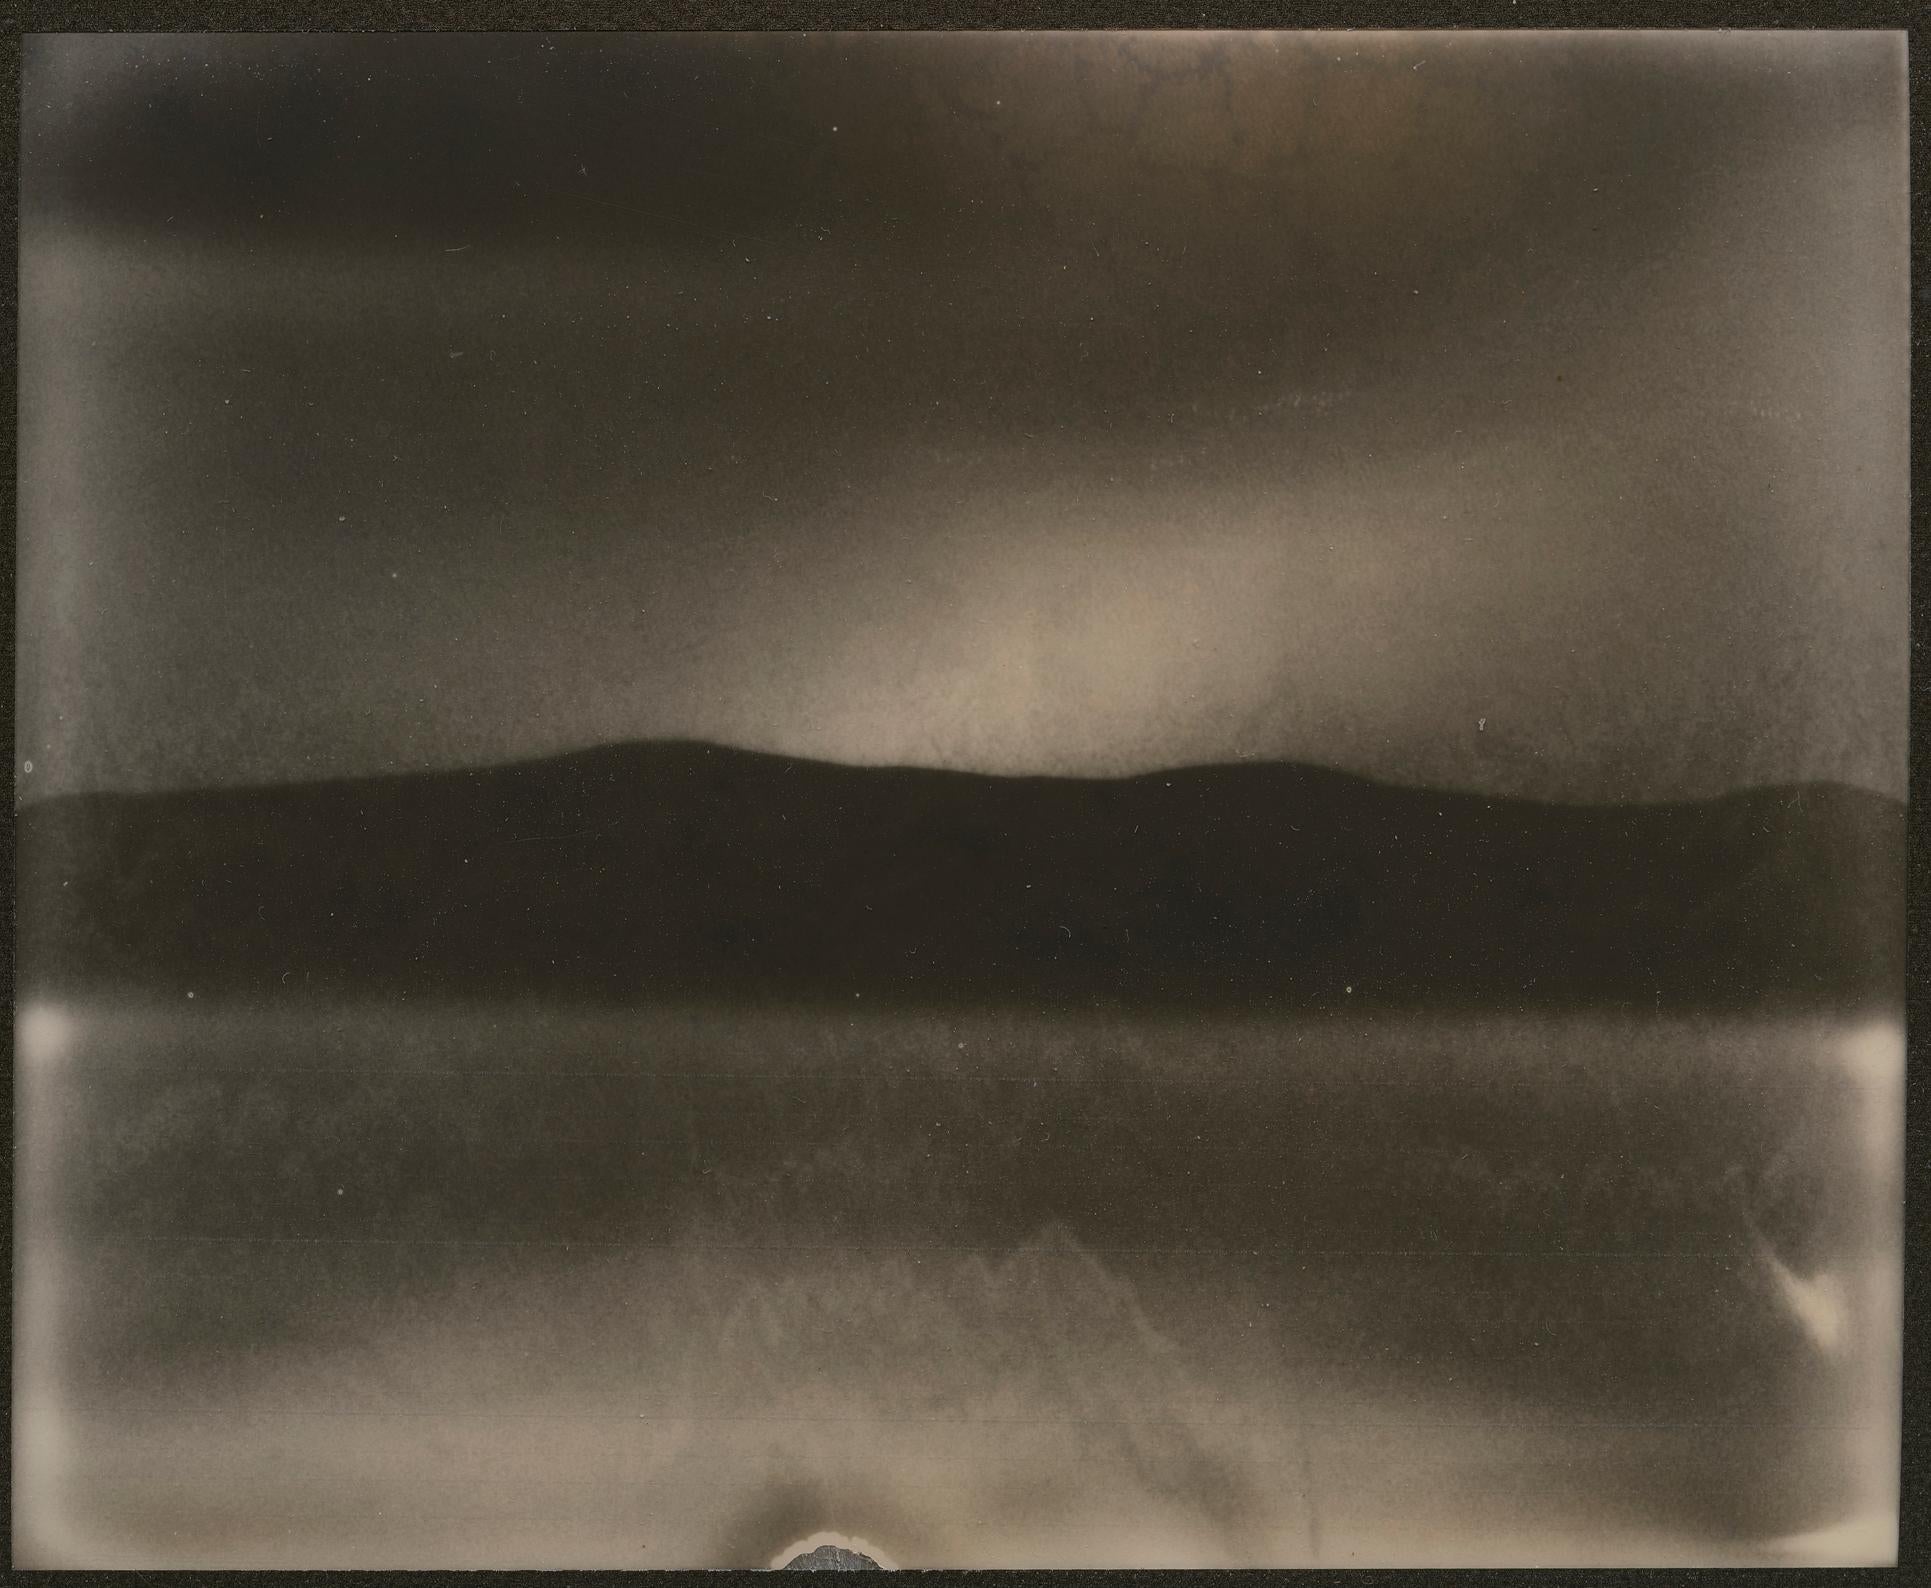 Abstract Photograph Stefanie Schneider - Sonata (Deconstructivisme) - Polaroid contemporain, expiré